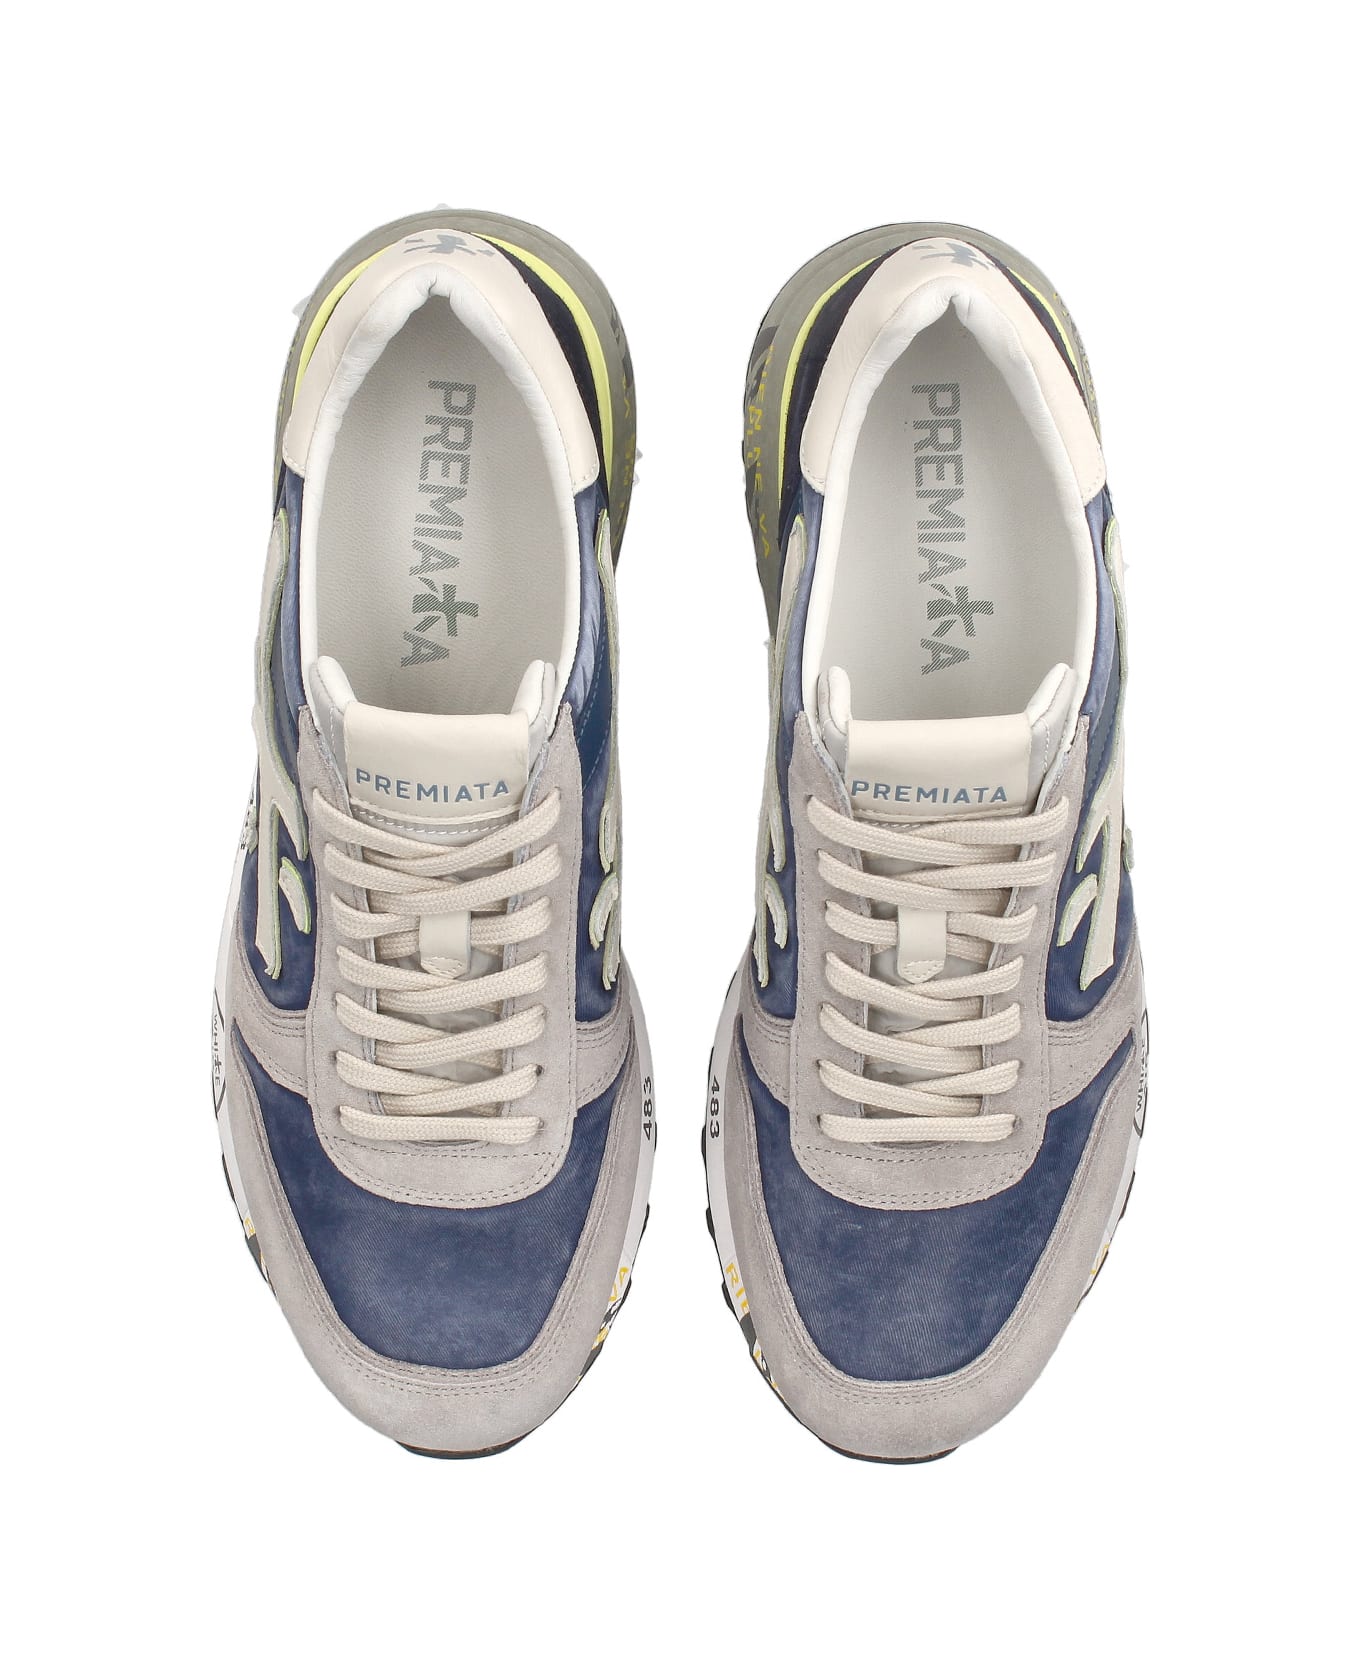 Premiata Mick 6617 Gray Blue Sneaker スニーカー